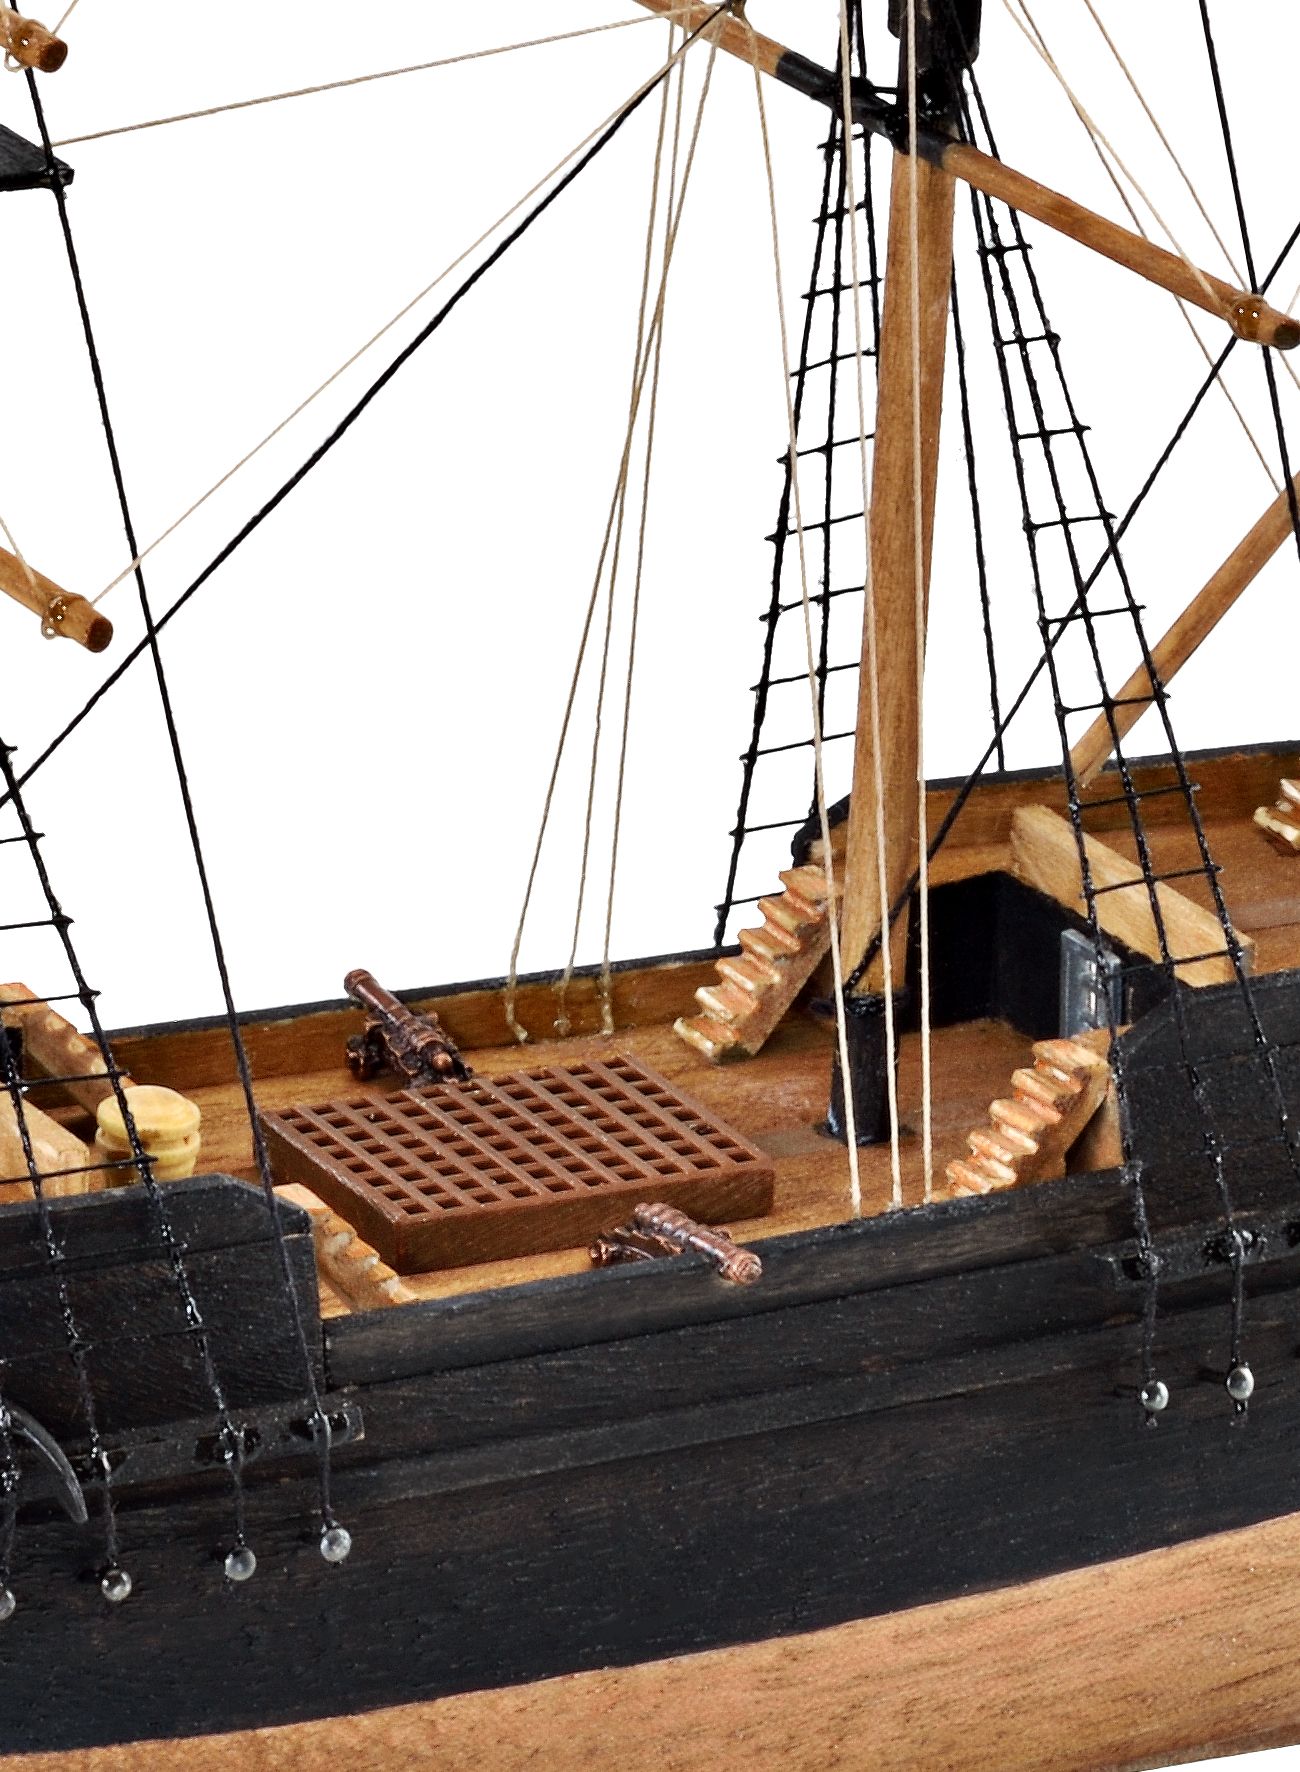 Pirate Ship Model Boat Kit Amati (600/01)